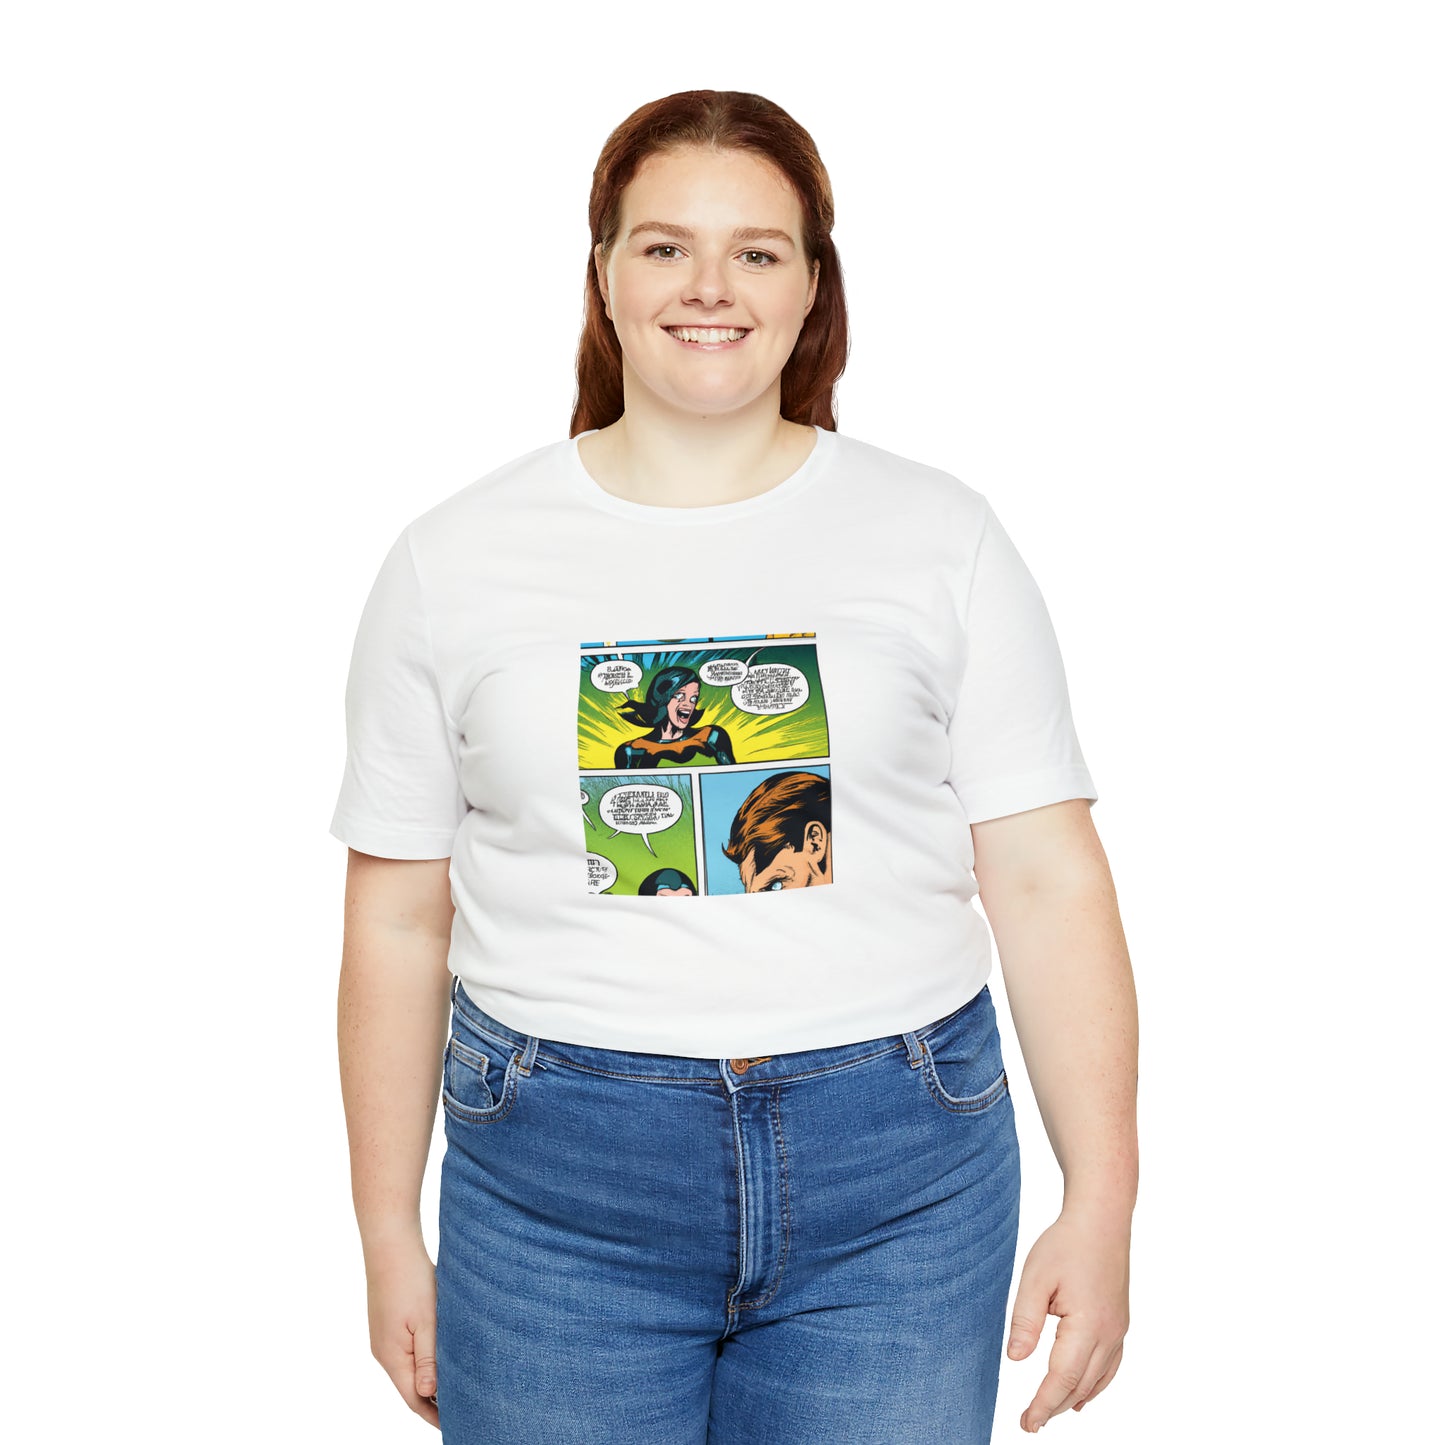 Augustus Sprittles - Comic Book Collector Tee Shirt